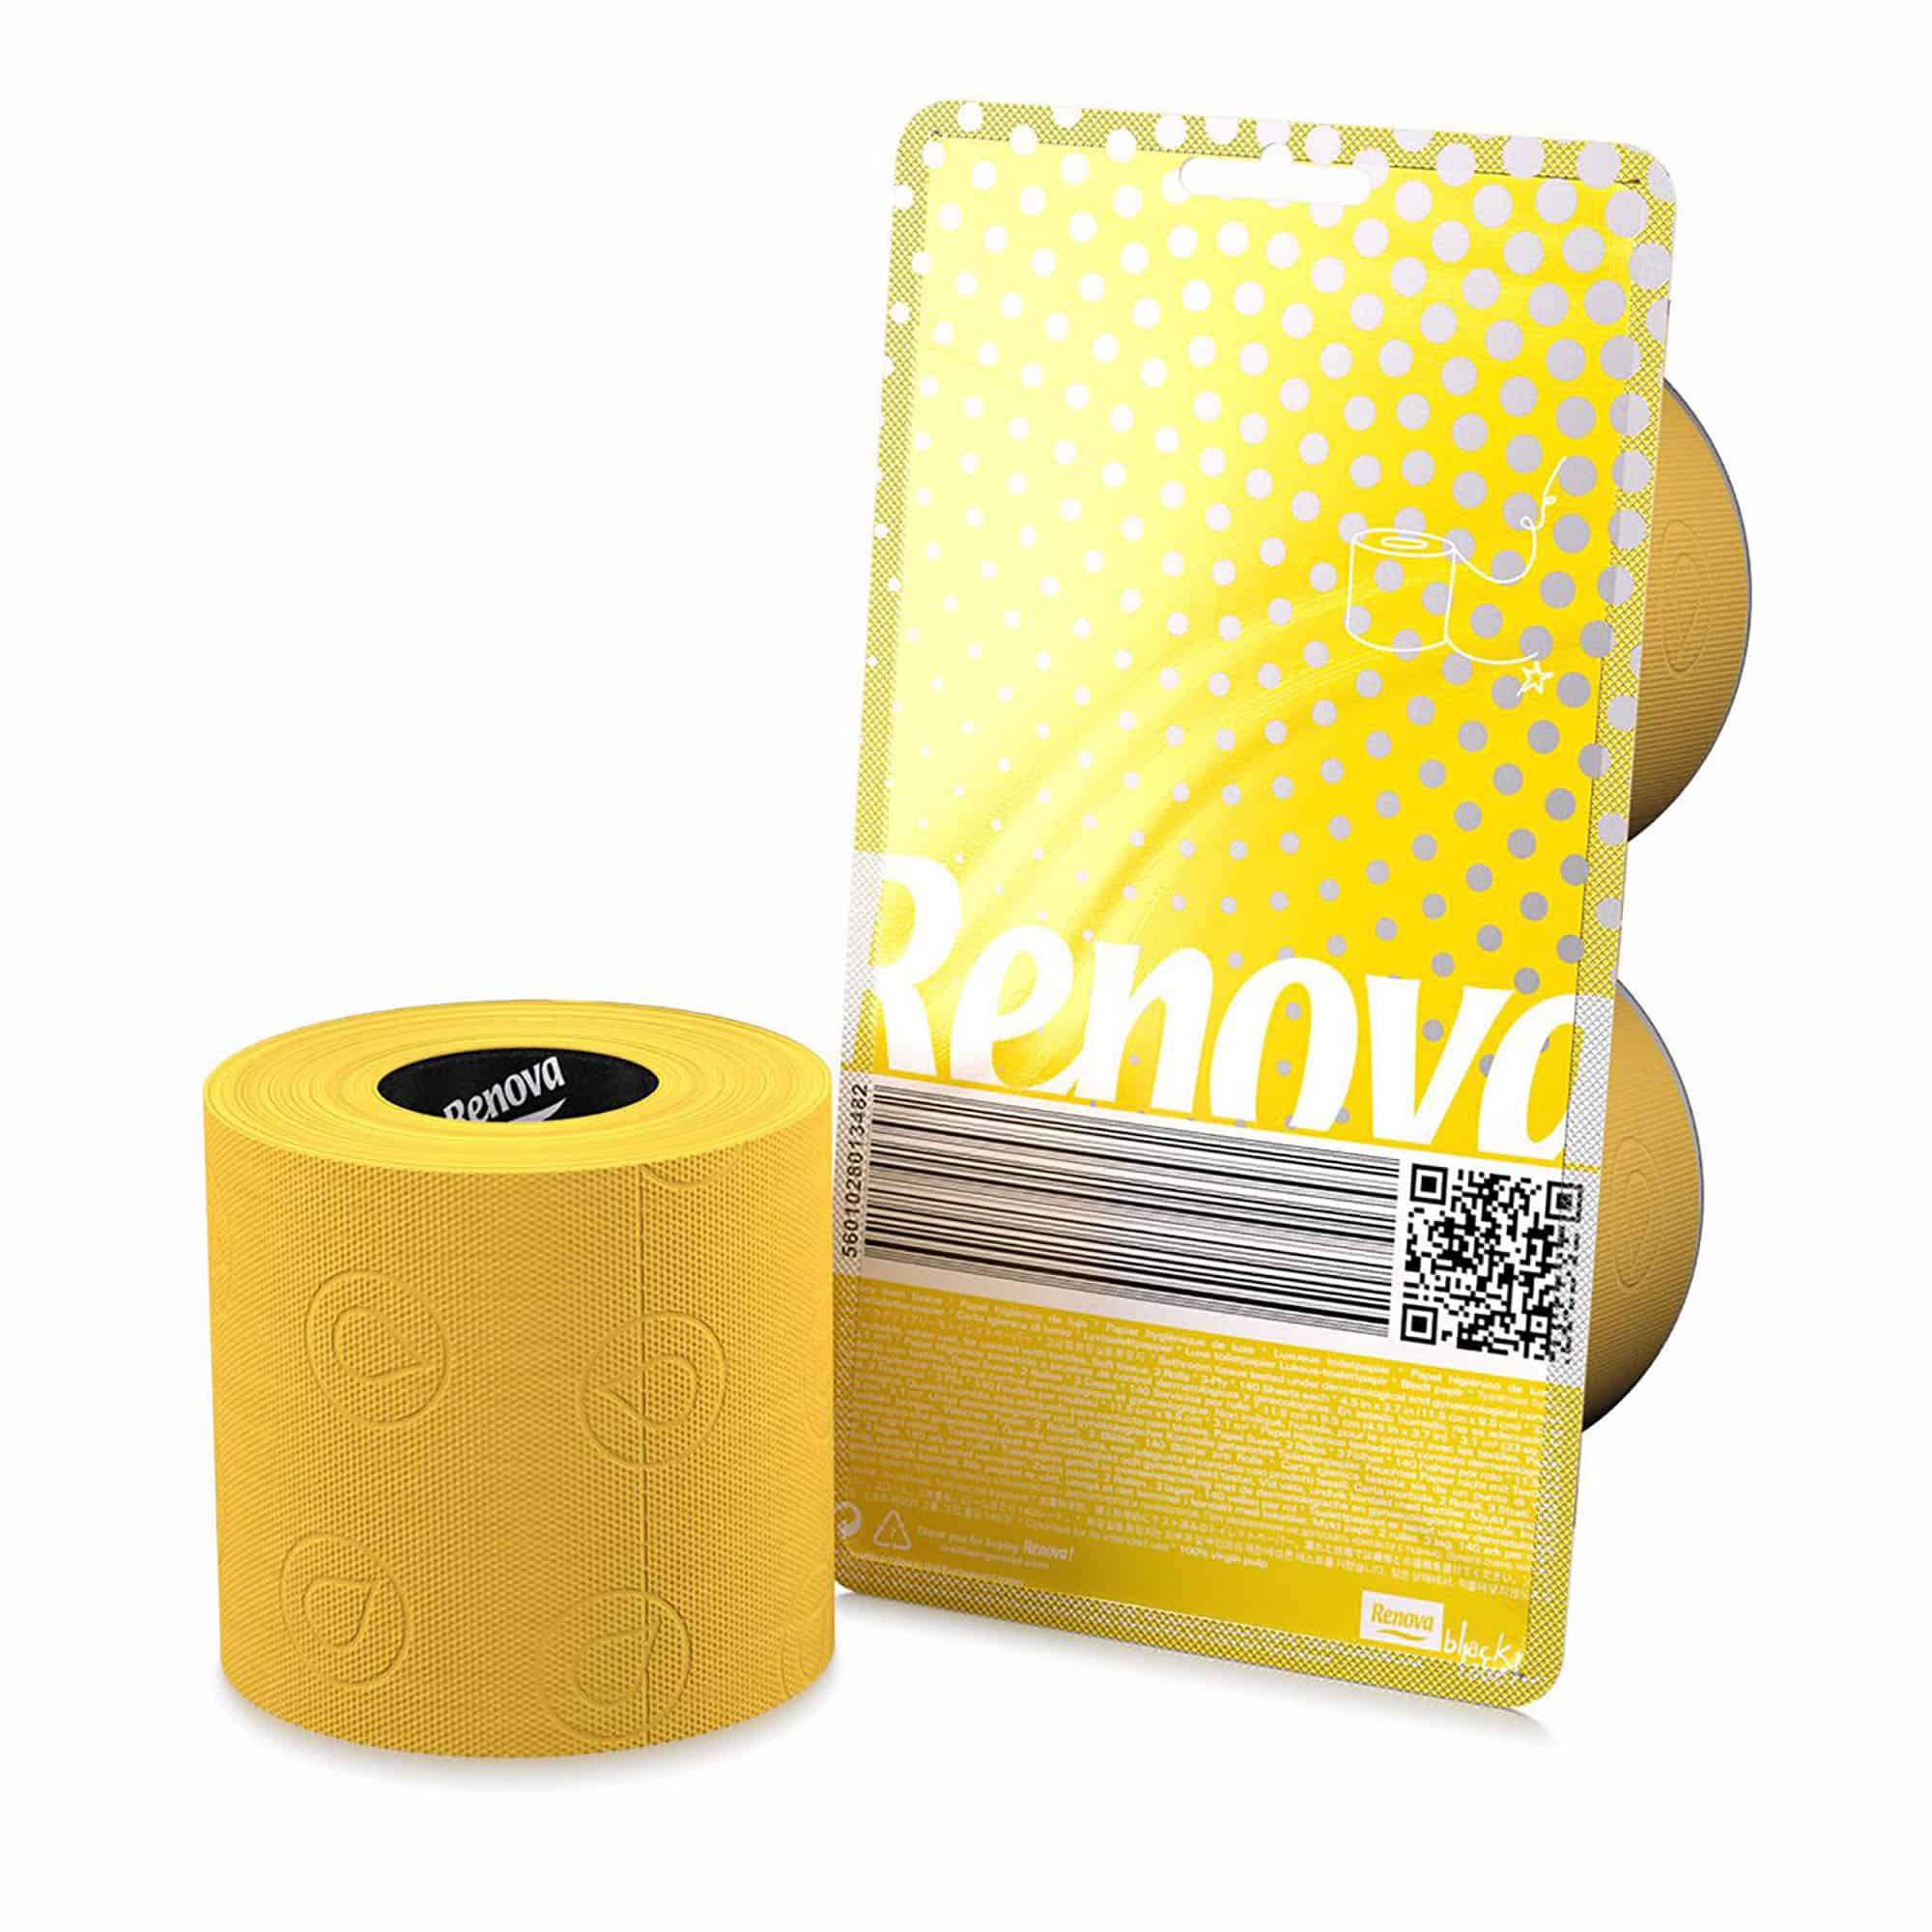 Luxury Scented Colored Toilet Paper Gift Box 3 Rolls 3-Ply Bath Tissue Renova 